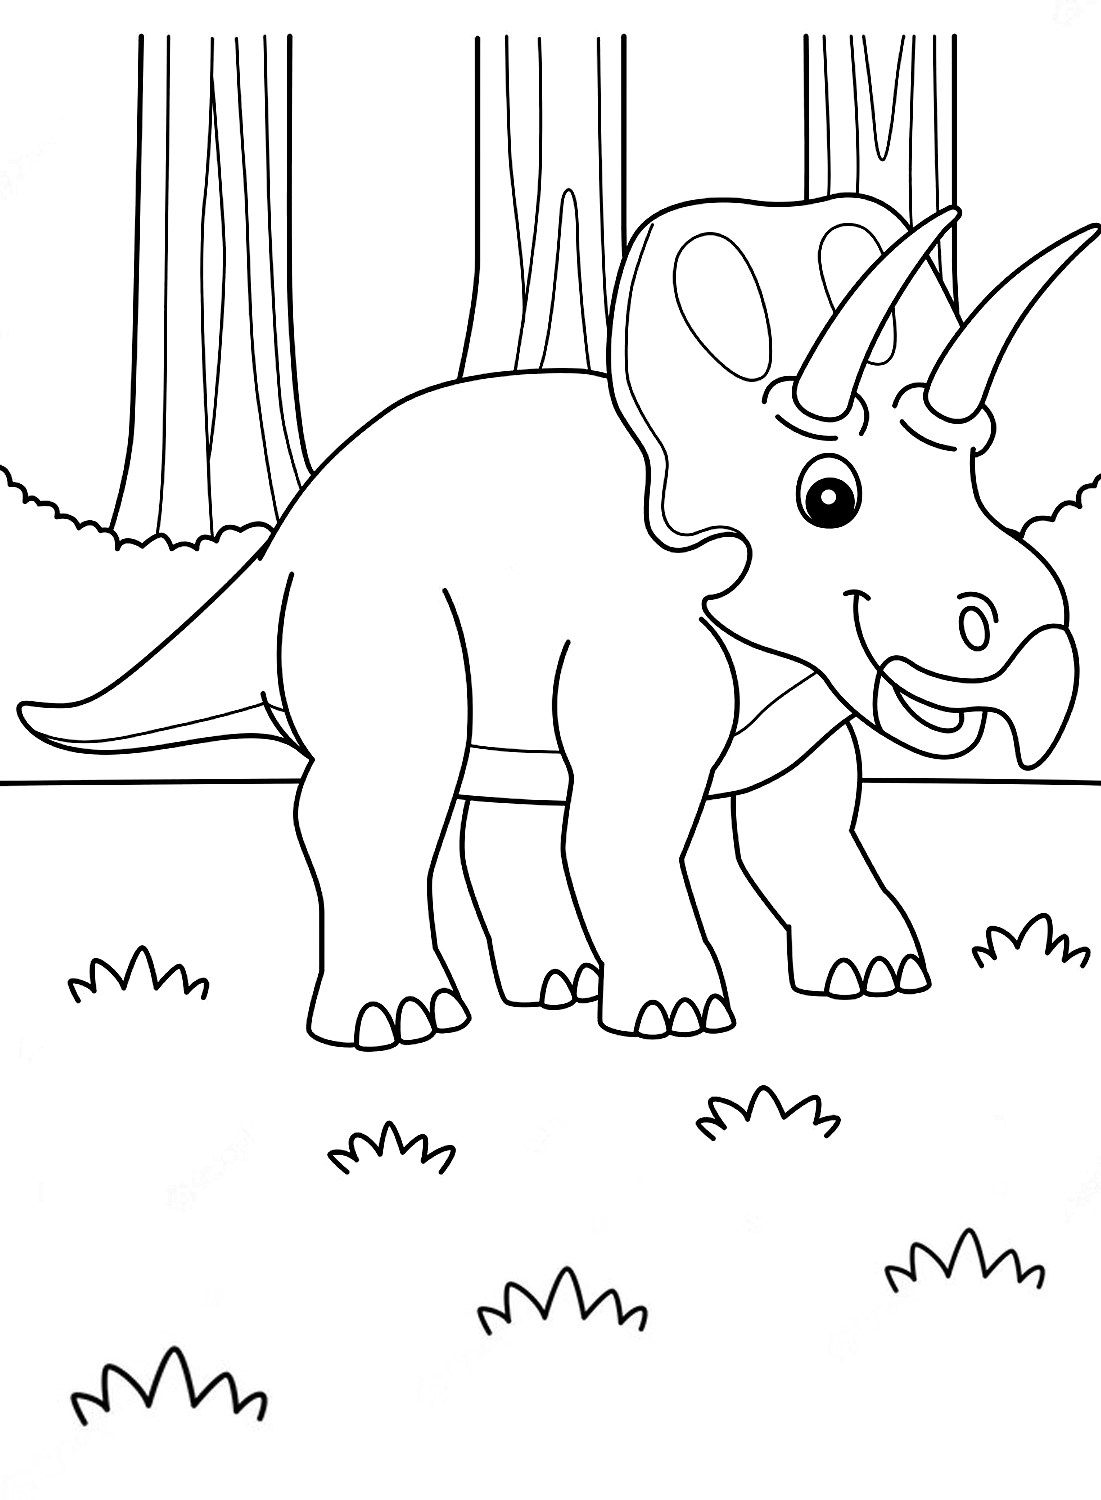 Triceratops coloring sheet